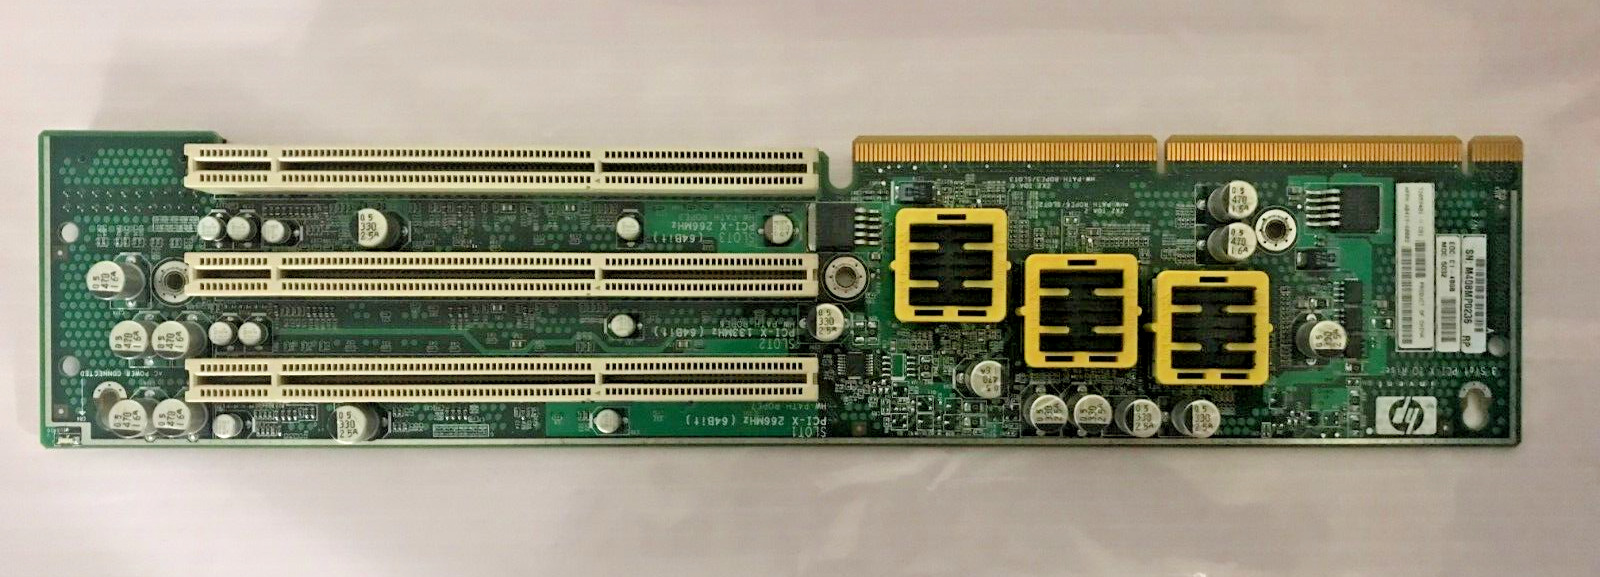 HP AB419-69002 PCI-X I/O Backplane Board for Integrity rx2660